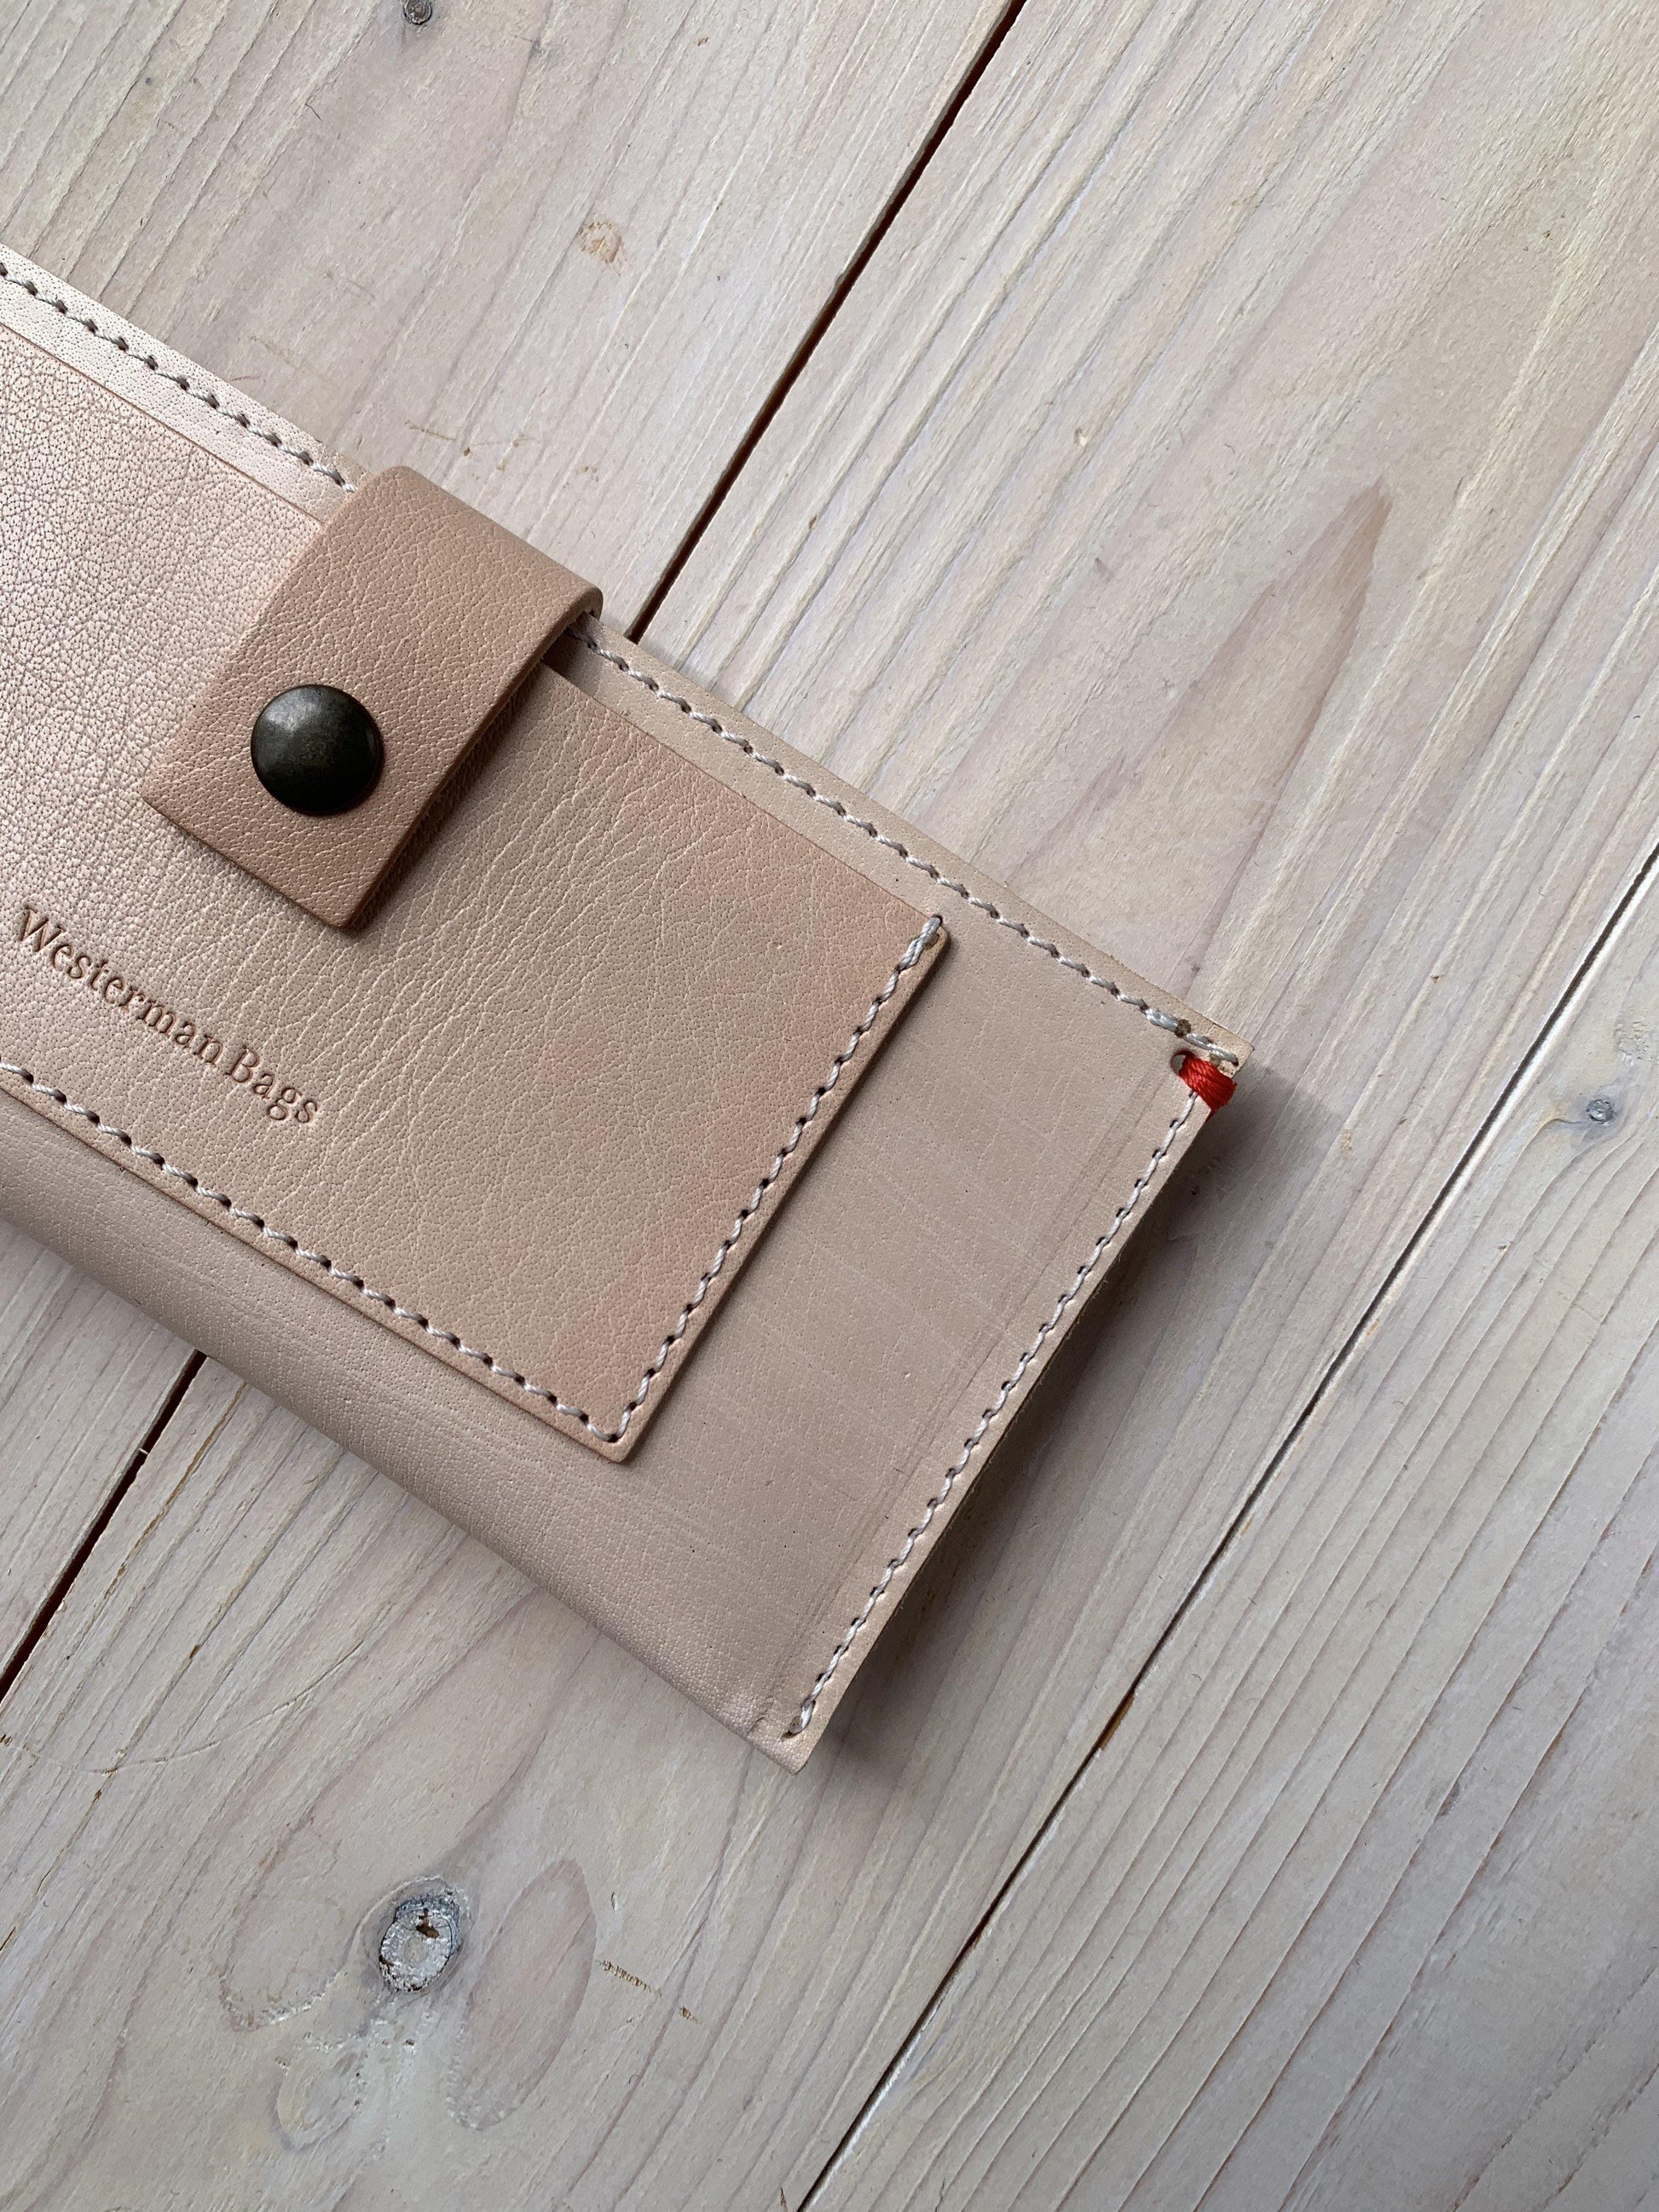 Iphone Wallet Nude Leder - All natural - Westerman Bags vilten tassen en hoezen. Dutch Design.